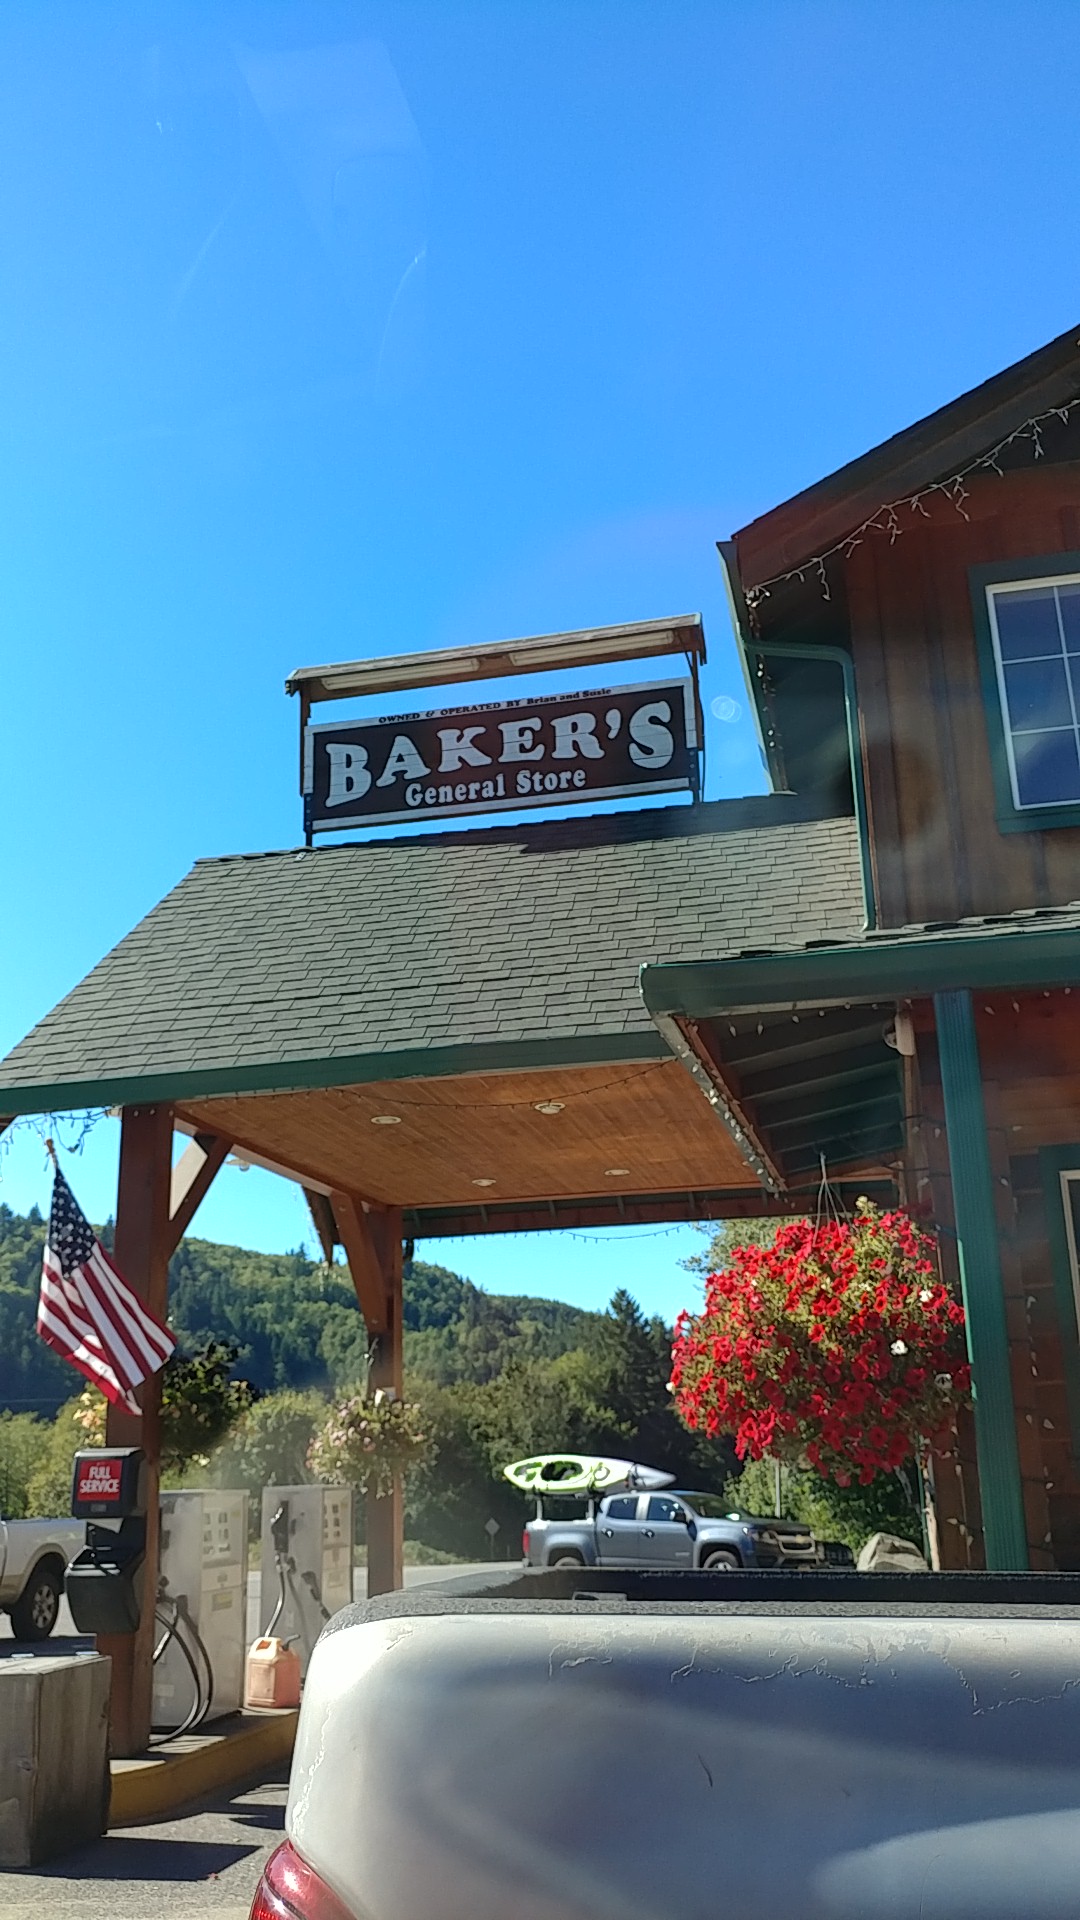 Baker's General Store